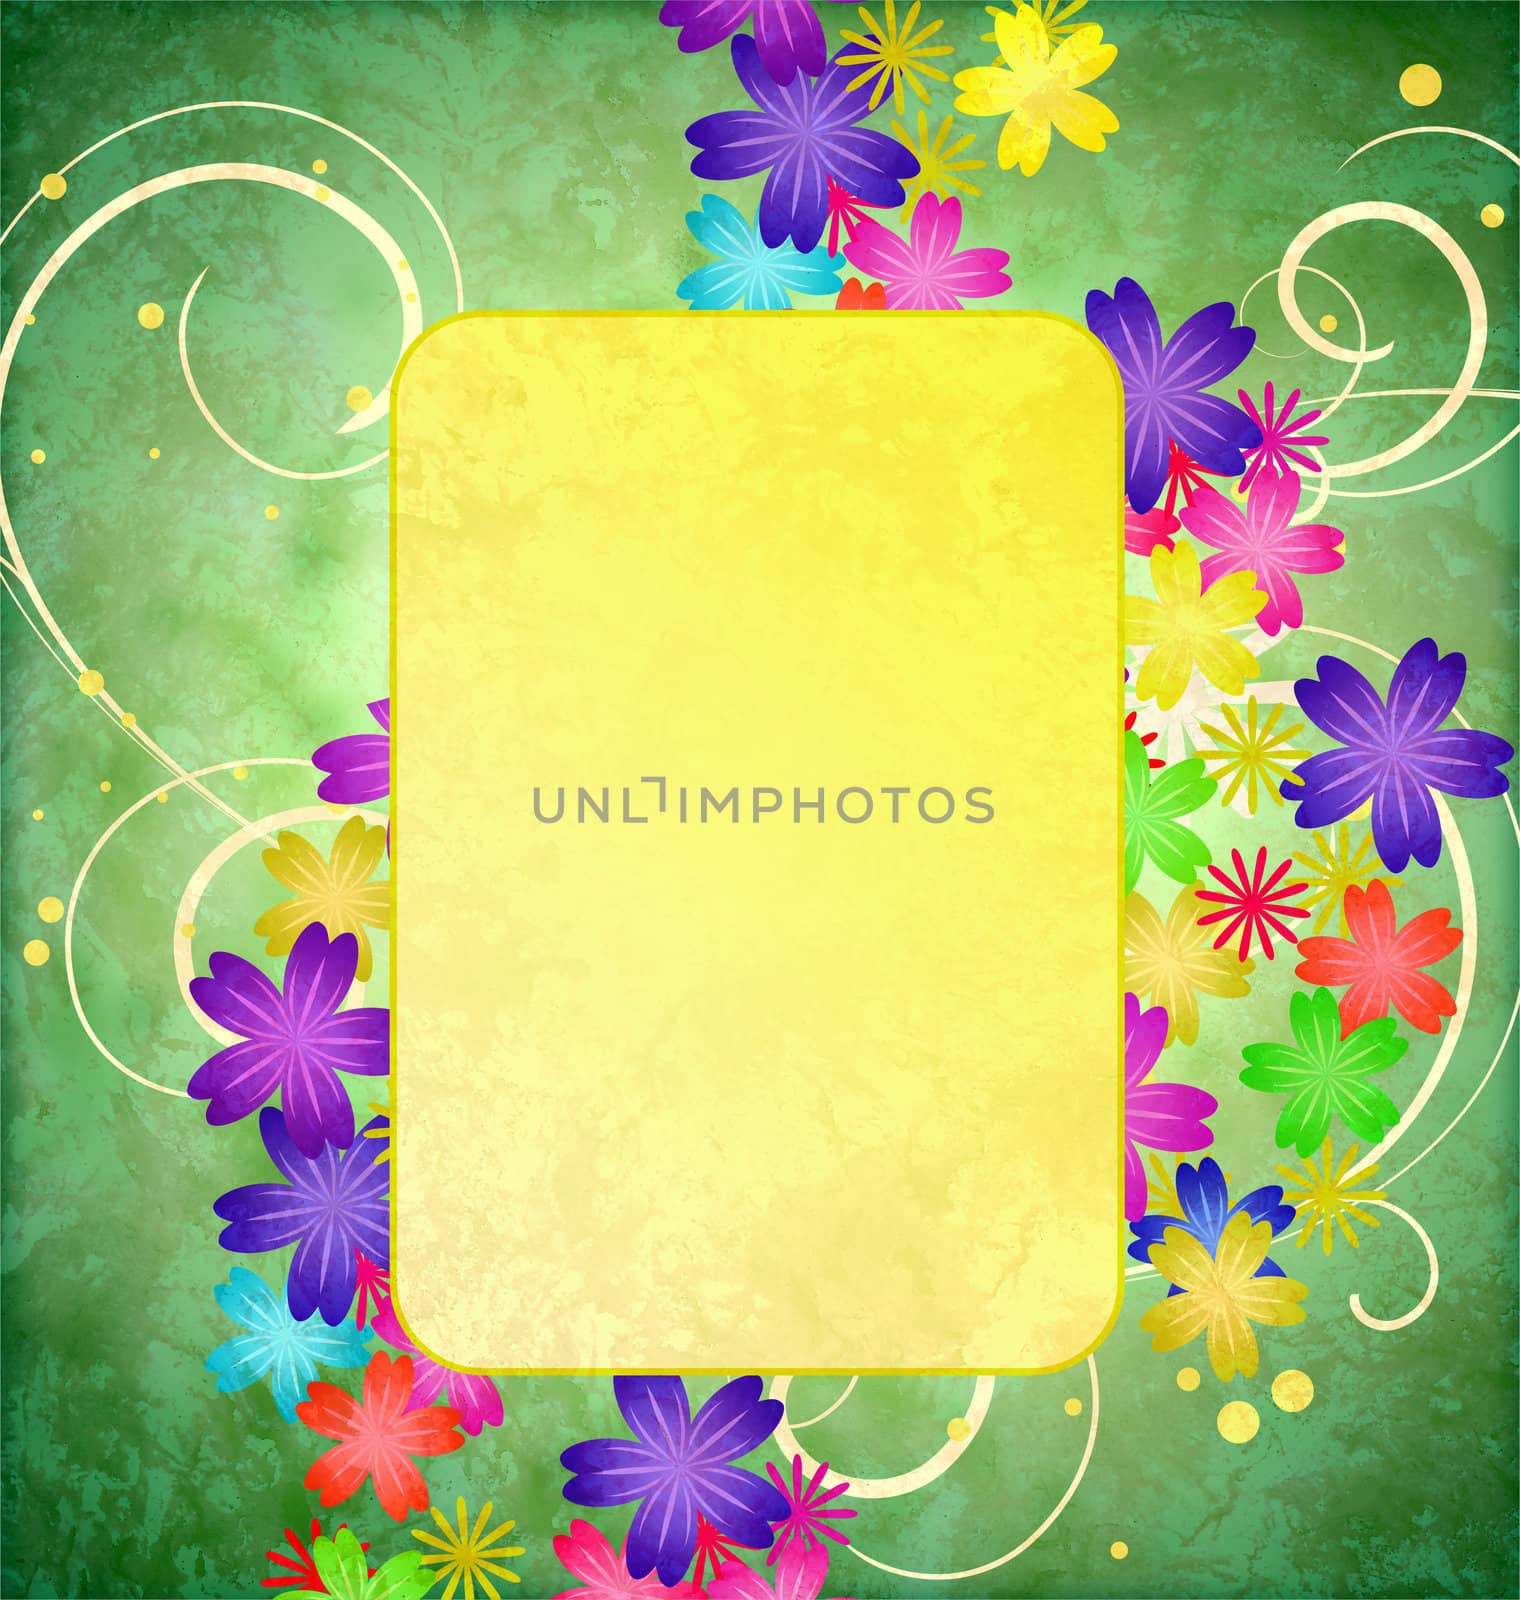 colorful flowers flourishes frame on green grunge background vintage style illustration